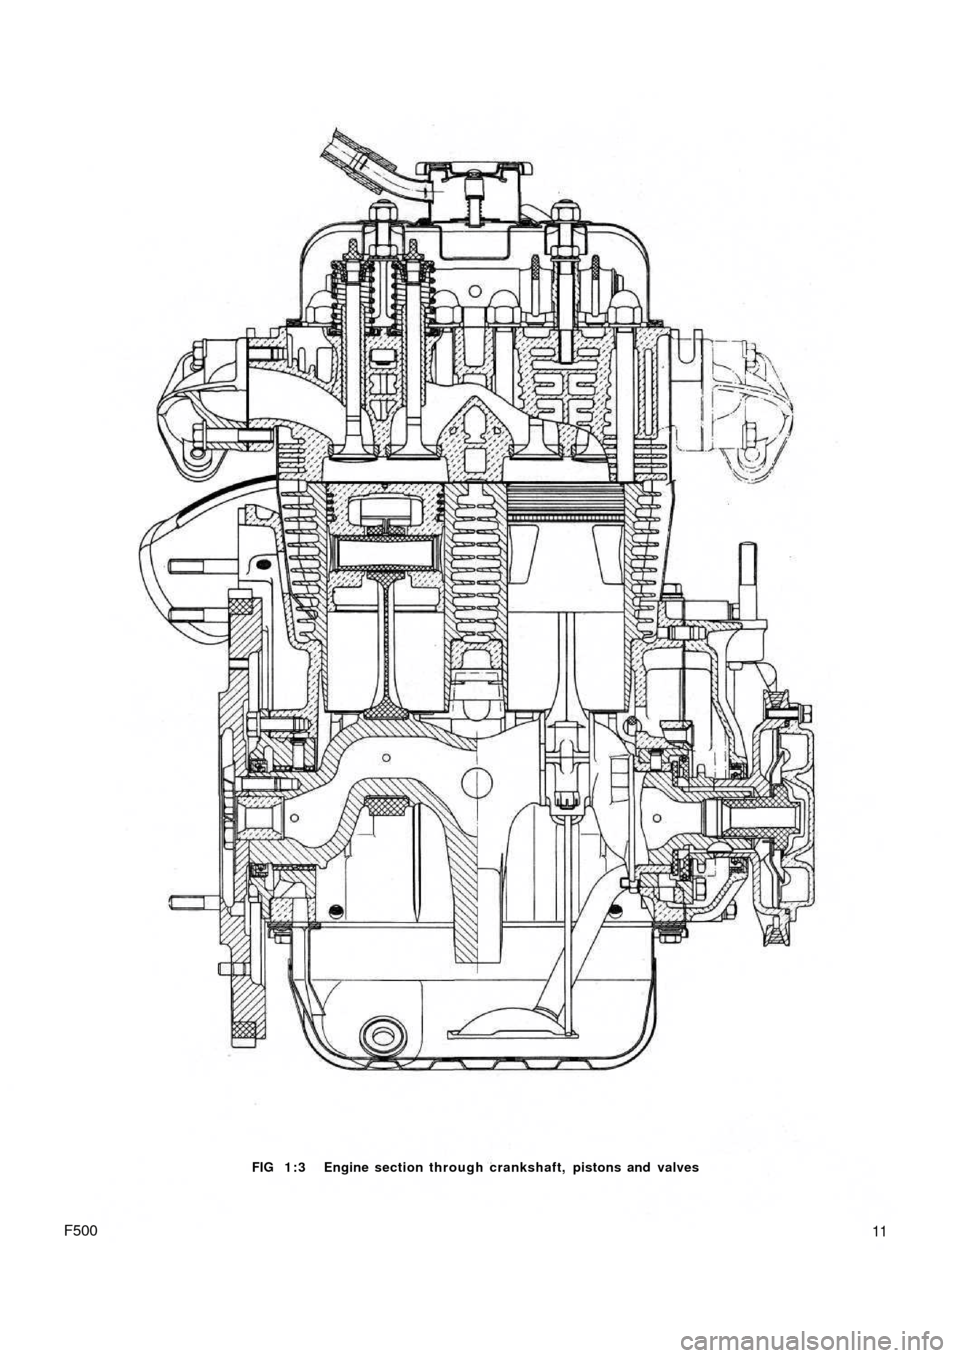 FIAT 500 1964 1.G Workshop Manual FIG 1 : 3  Engine section through crankshaft, pistons and  valves
F50011 